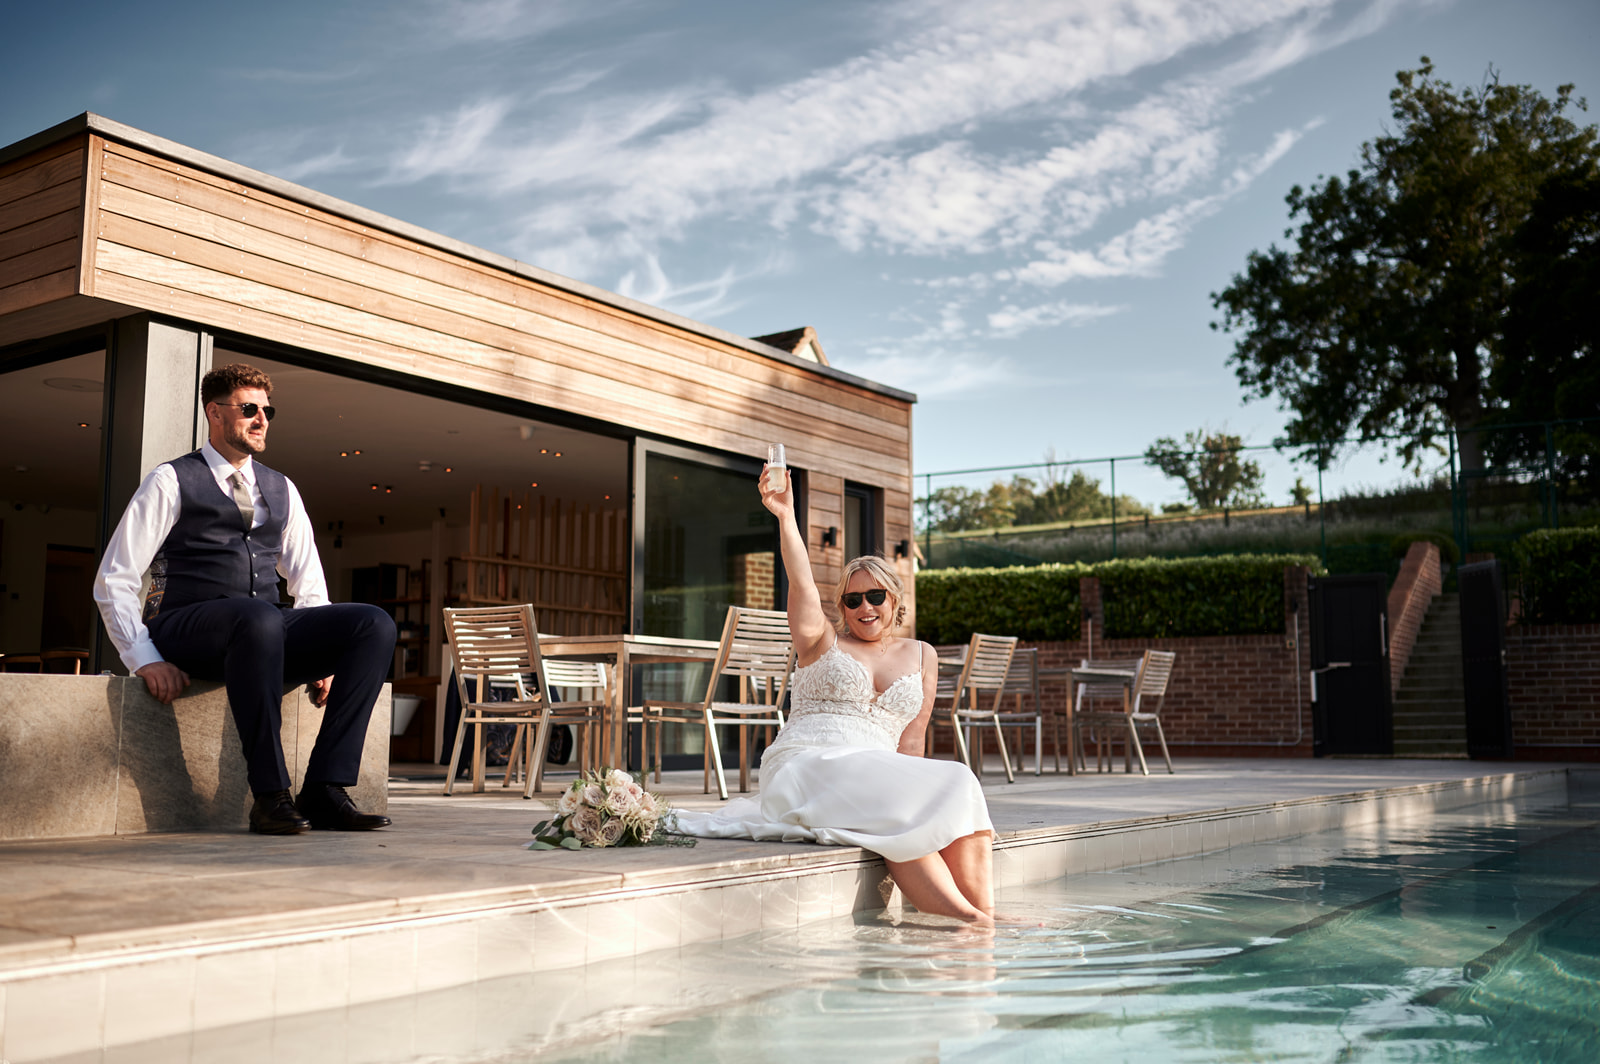 Talbooth House & Spa Wedding - Rachel Reeve Photography Veil Couple Golden Hour by Pool